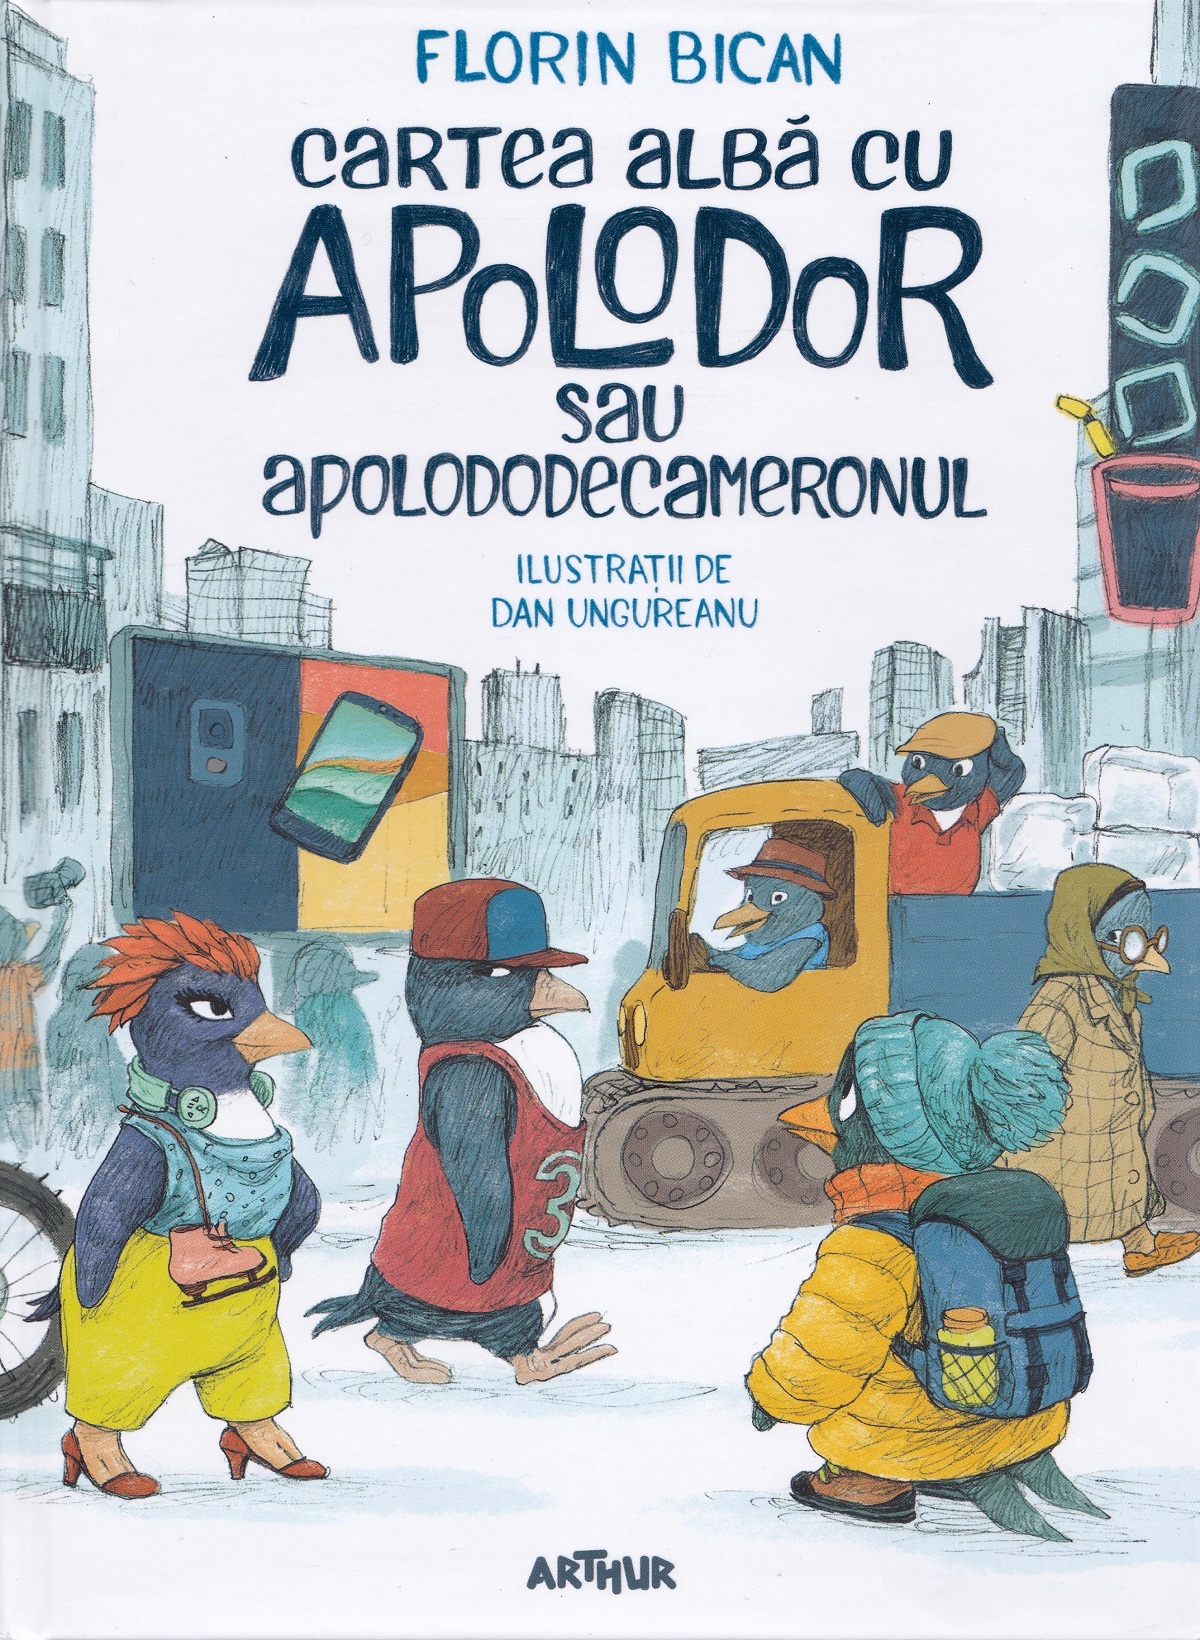 Cartea alba cu Apolodor sau Apolododecameronul